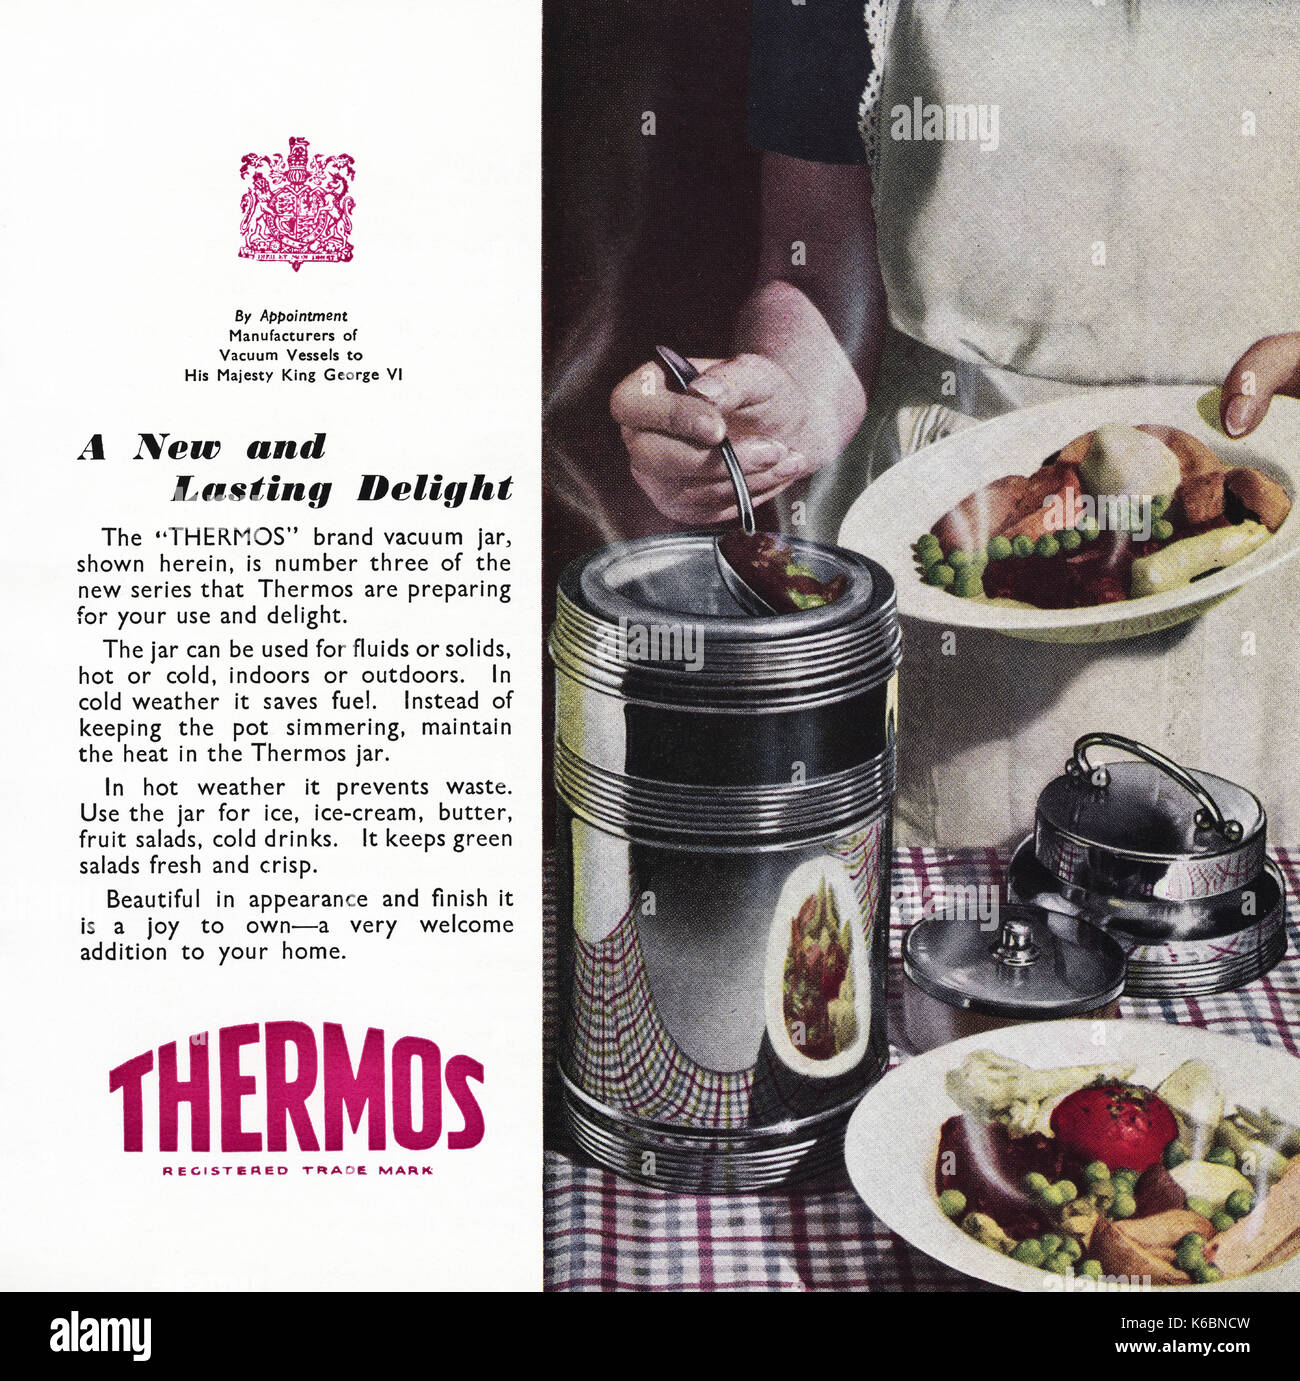 https://c8.alamy.com/comp/K6BNCW/1940s-old-vintage-original-advert-advertising-thermos-vacuum-flasks-K6BNCW.jpg